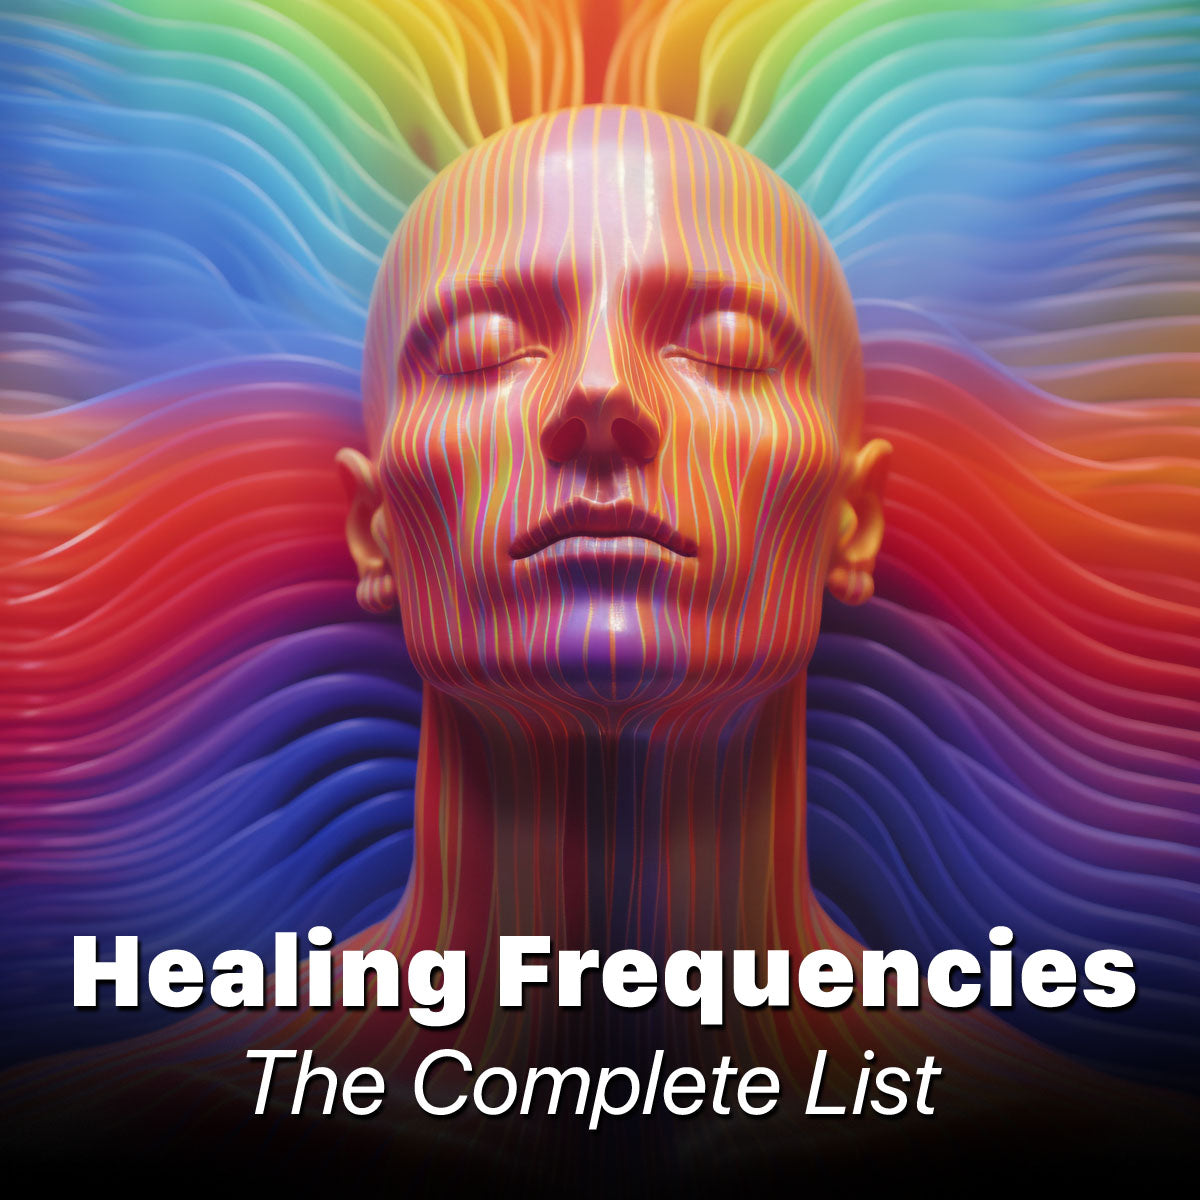 Chakra Healing Tones: Therapy for All 7 Chakras, Activation,  Transformation, Deep Meditation - Álbum de Chakra Balancing Meditation